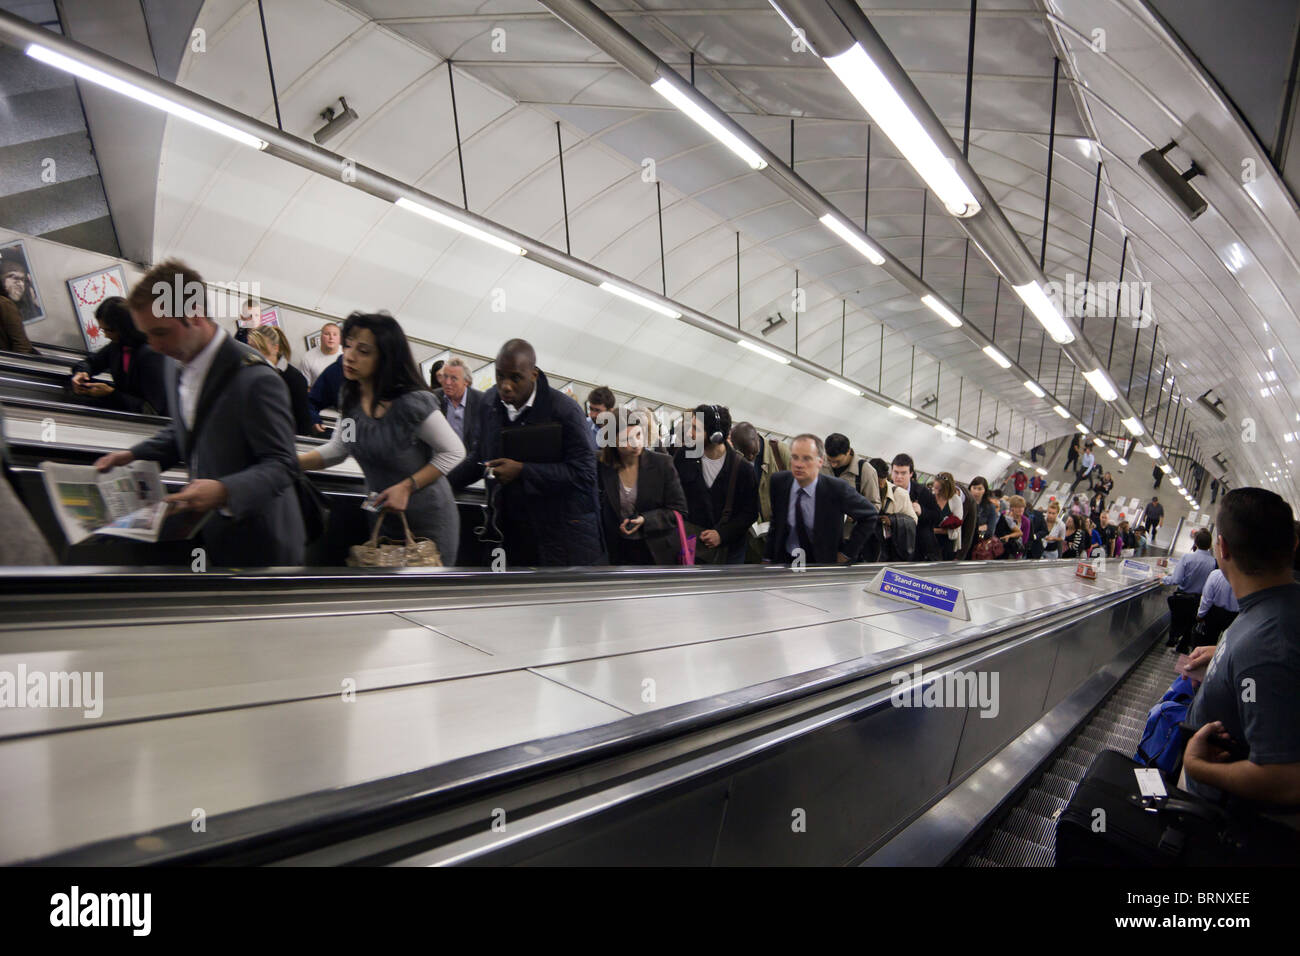 überfüllten Rolltreppen, London Underground, London, England Stockfoto